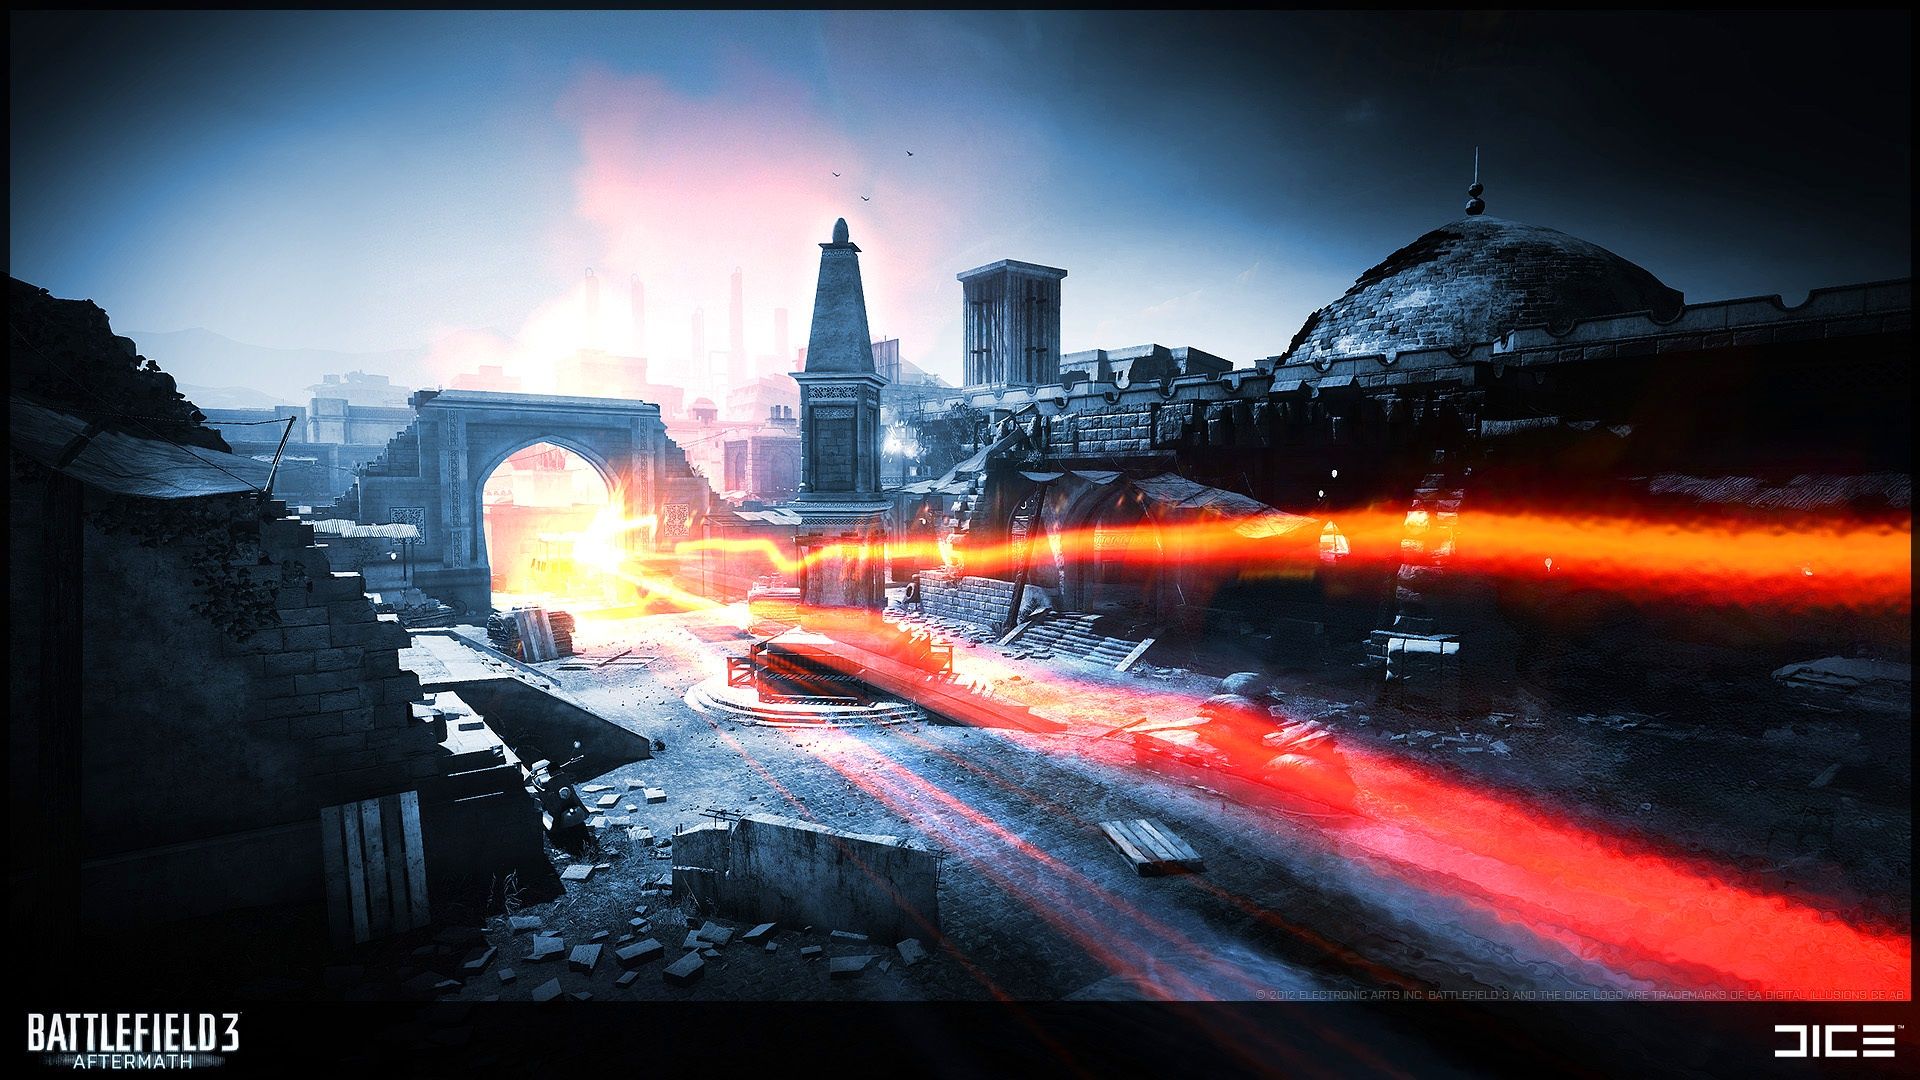 Battlefield 3 Aftermath Wallpaper in jpg format for free download